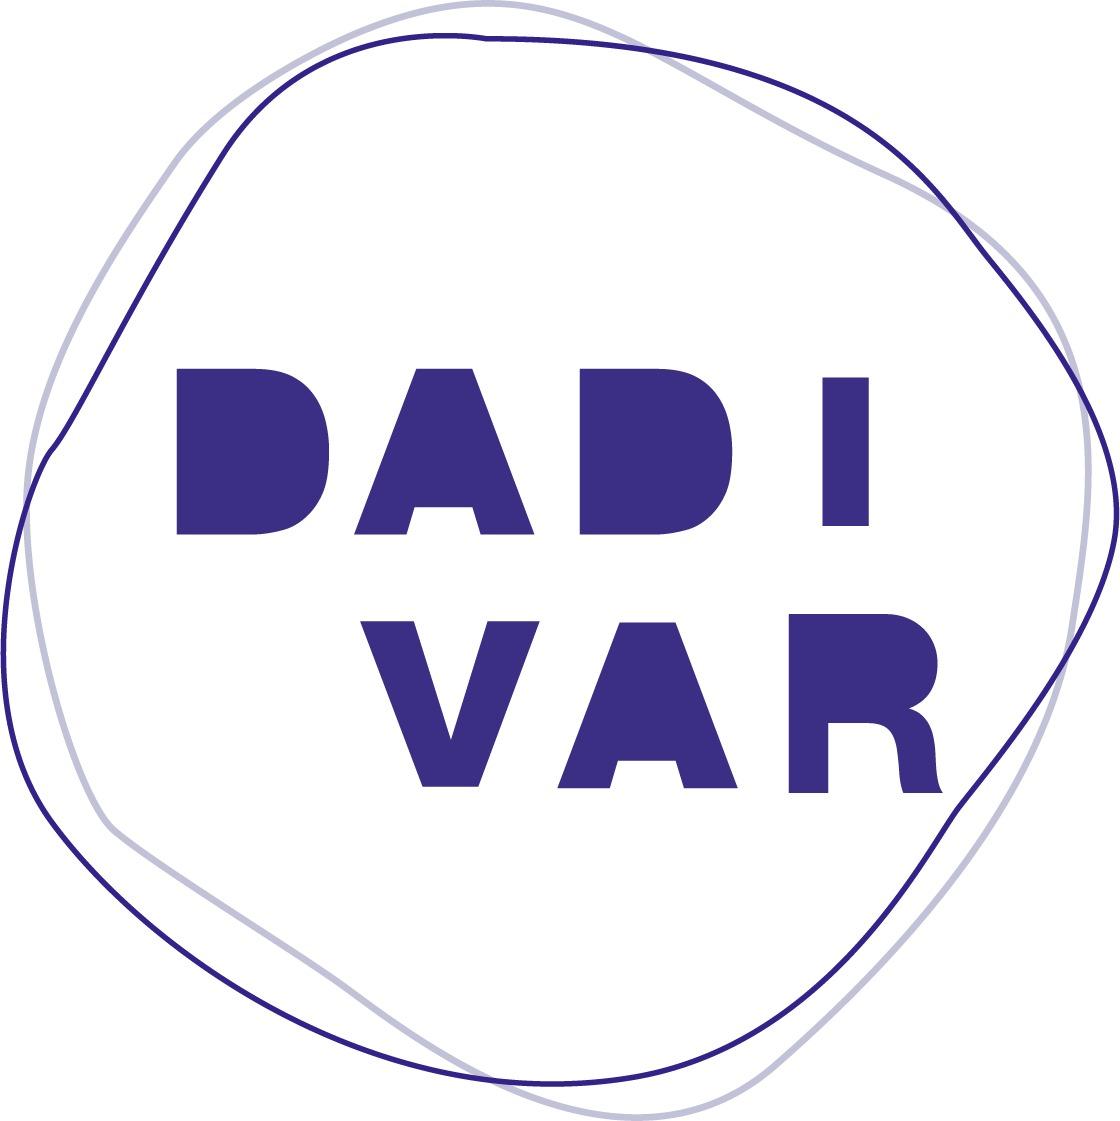 Dadivar